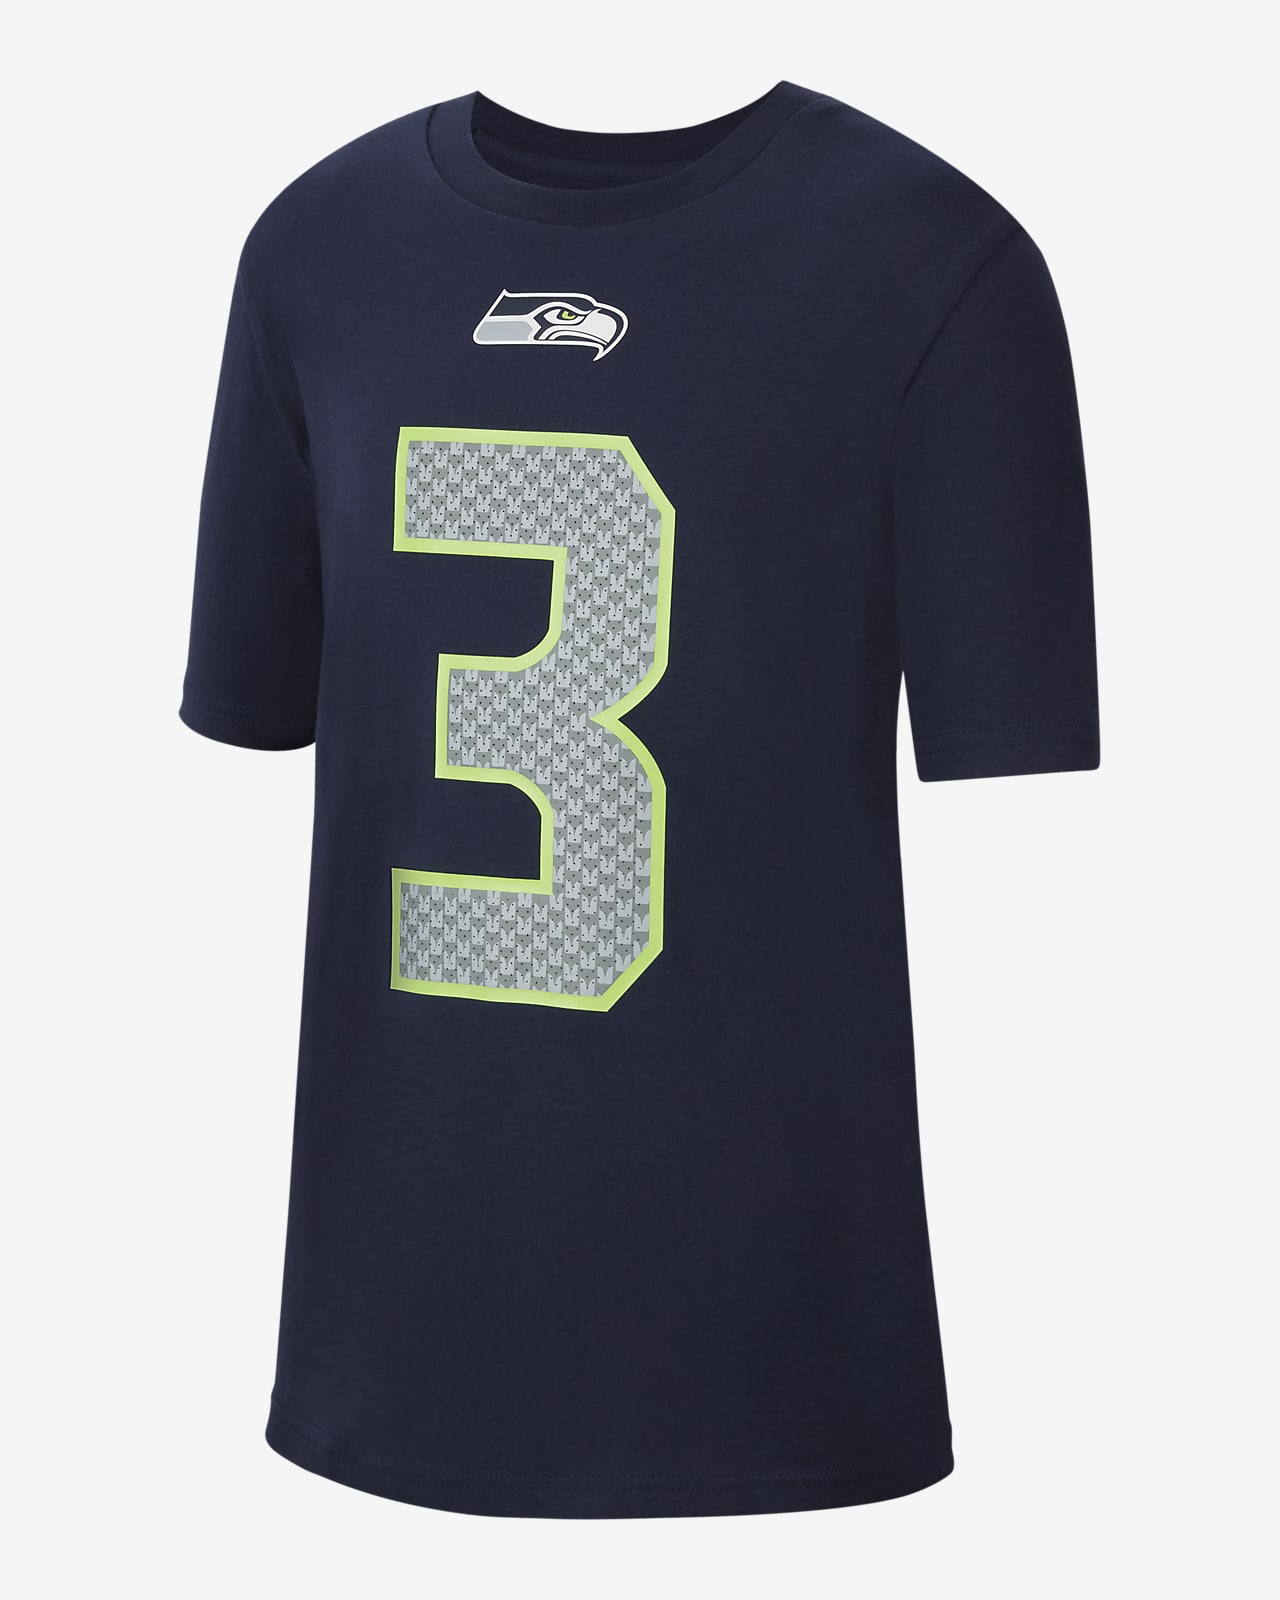 Nike (NFL Seattle Seahawks) Samarreta - Nen/a